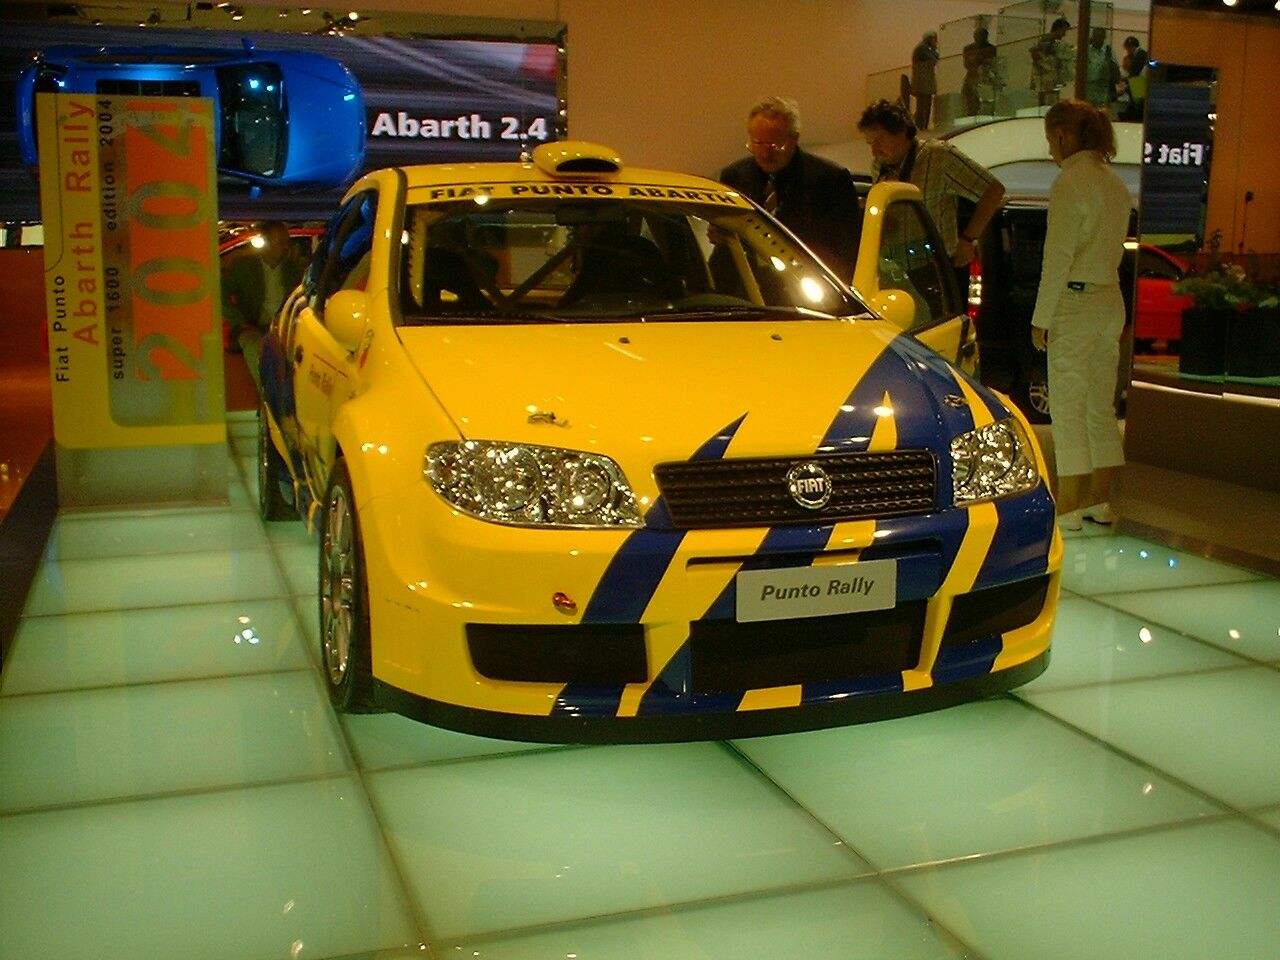 New Fiat Punto Abarth Rally at the 2003 Frankfurt Motor Show